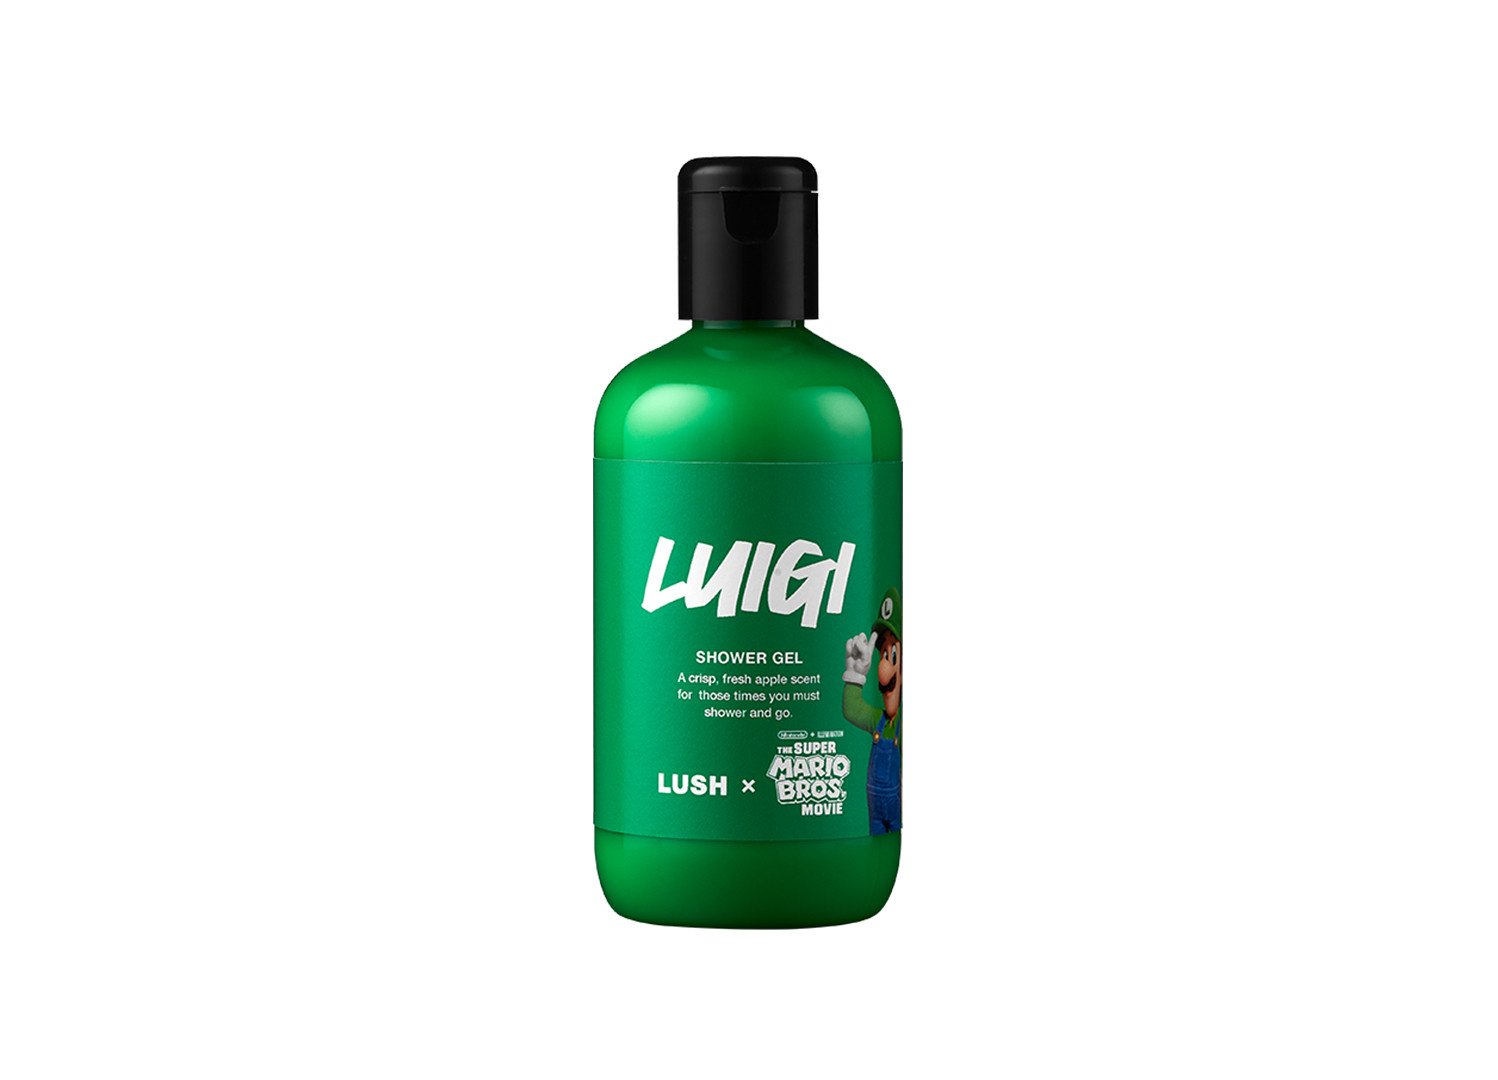 Lush_LUSH x Super Mario Bros Movie_Luigi Shower Gel_Product Sho_Compressedt